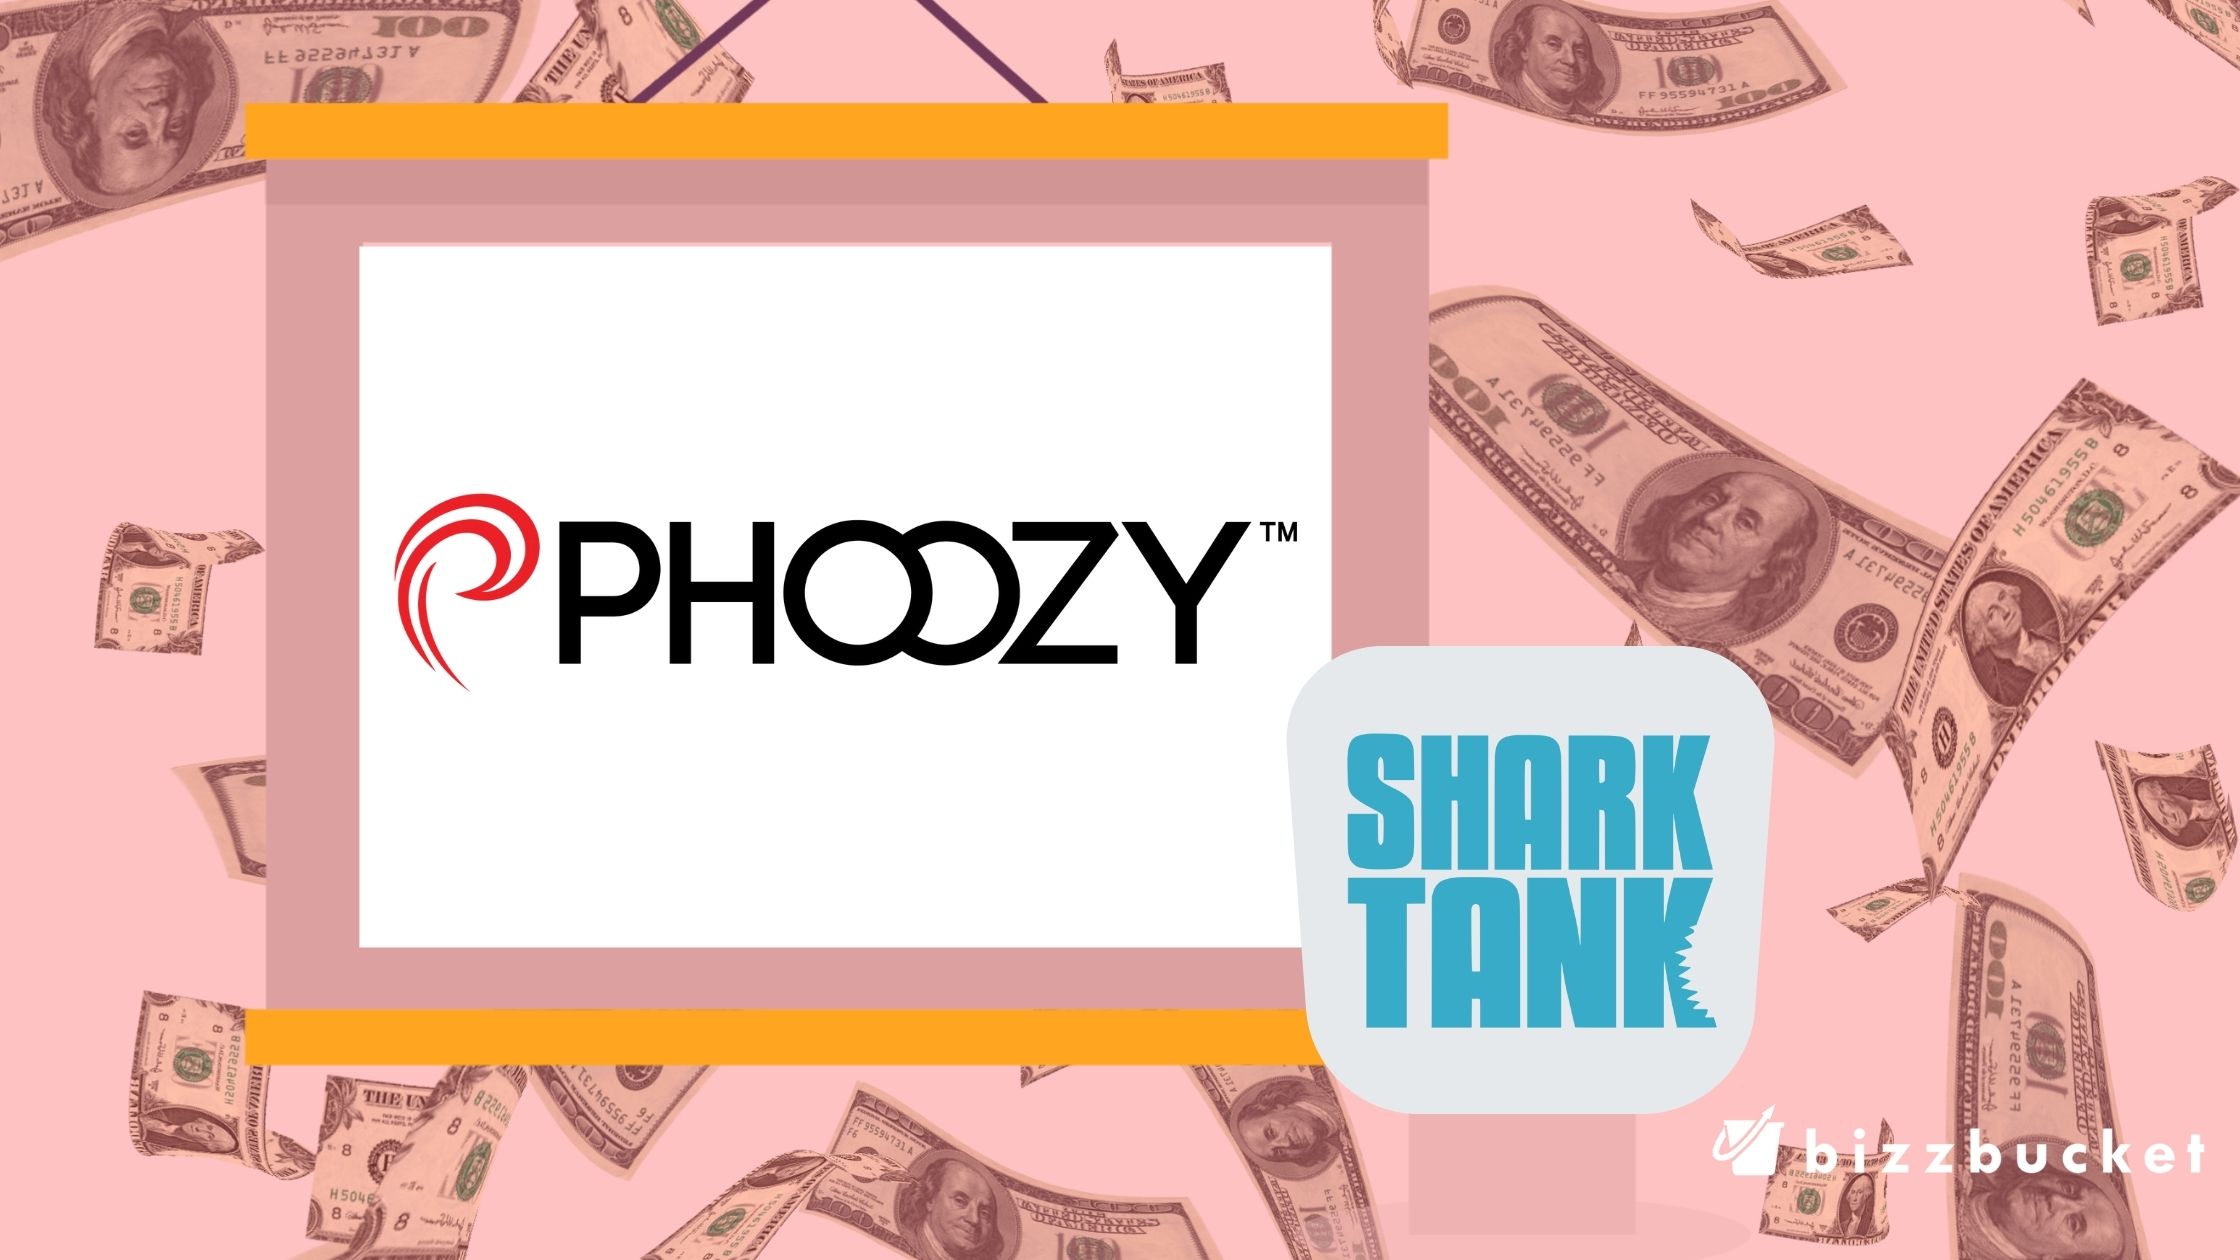 Phoozy shark tank update